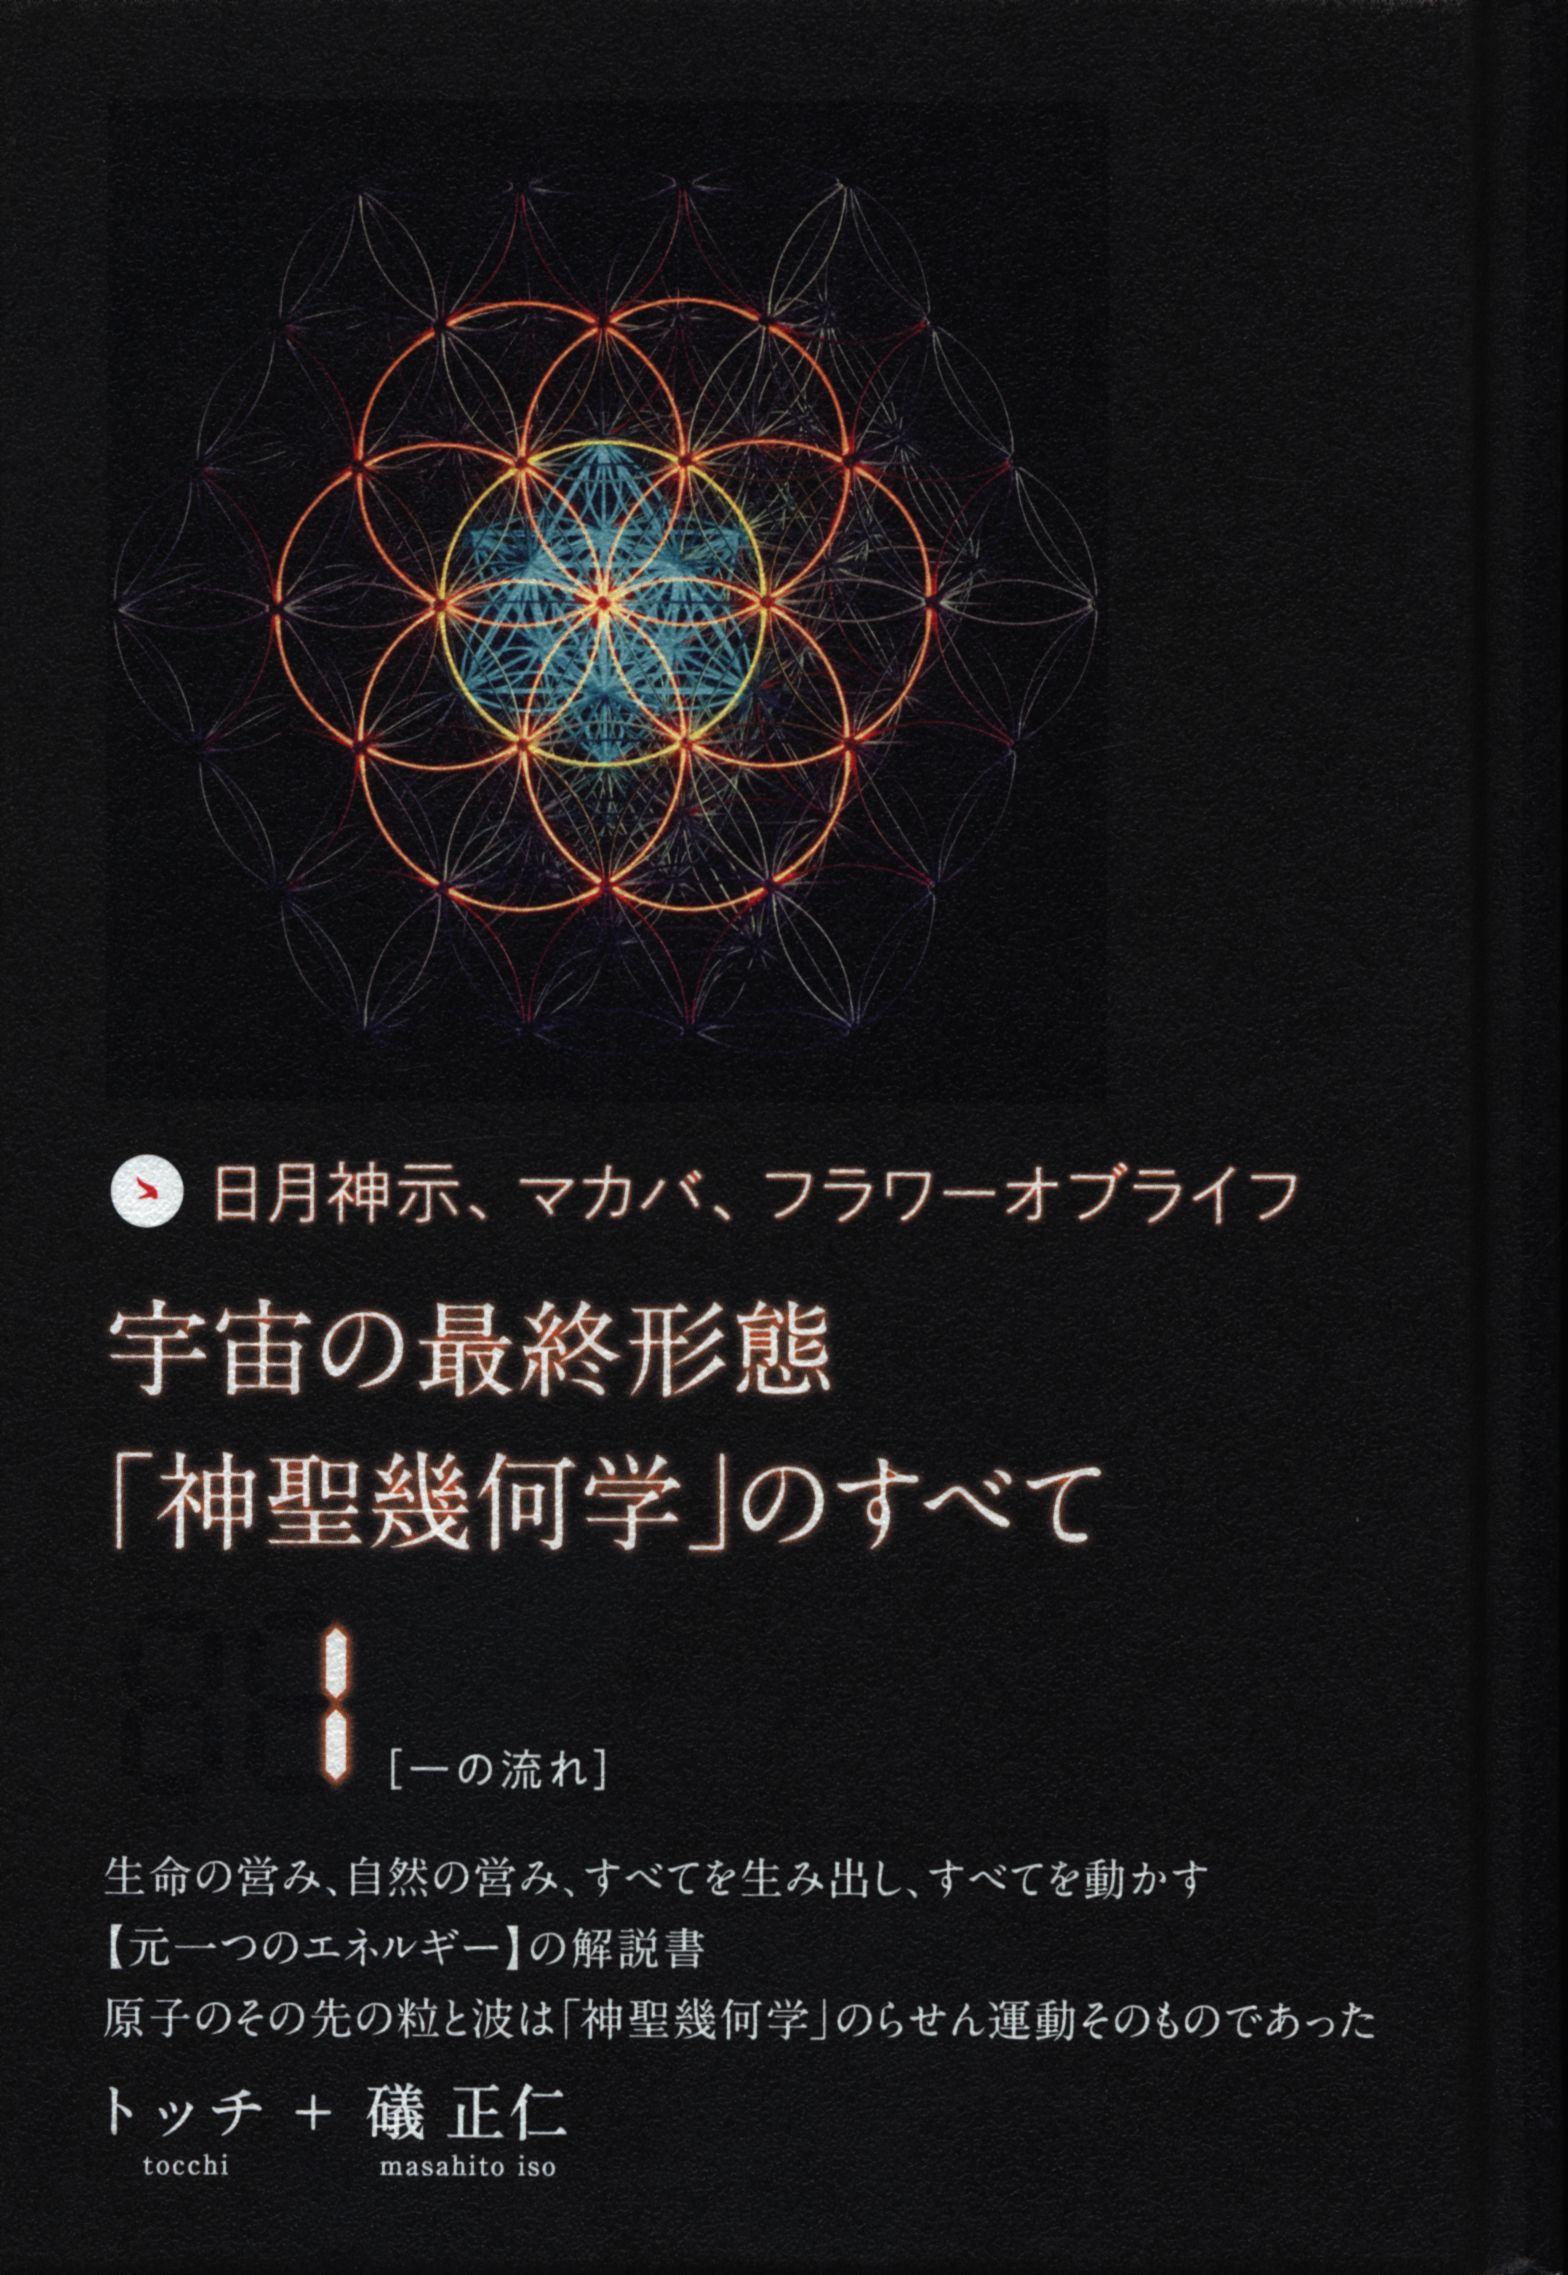 DVD】宇宙の最終形態「神聖幾何学」のすべて・全12回連続講座 九の流れ